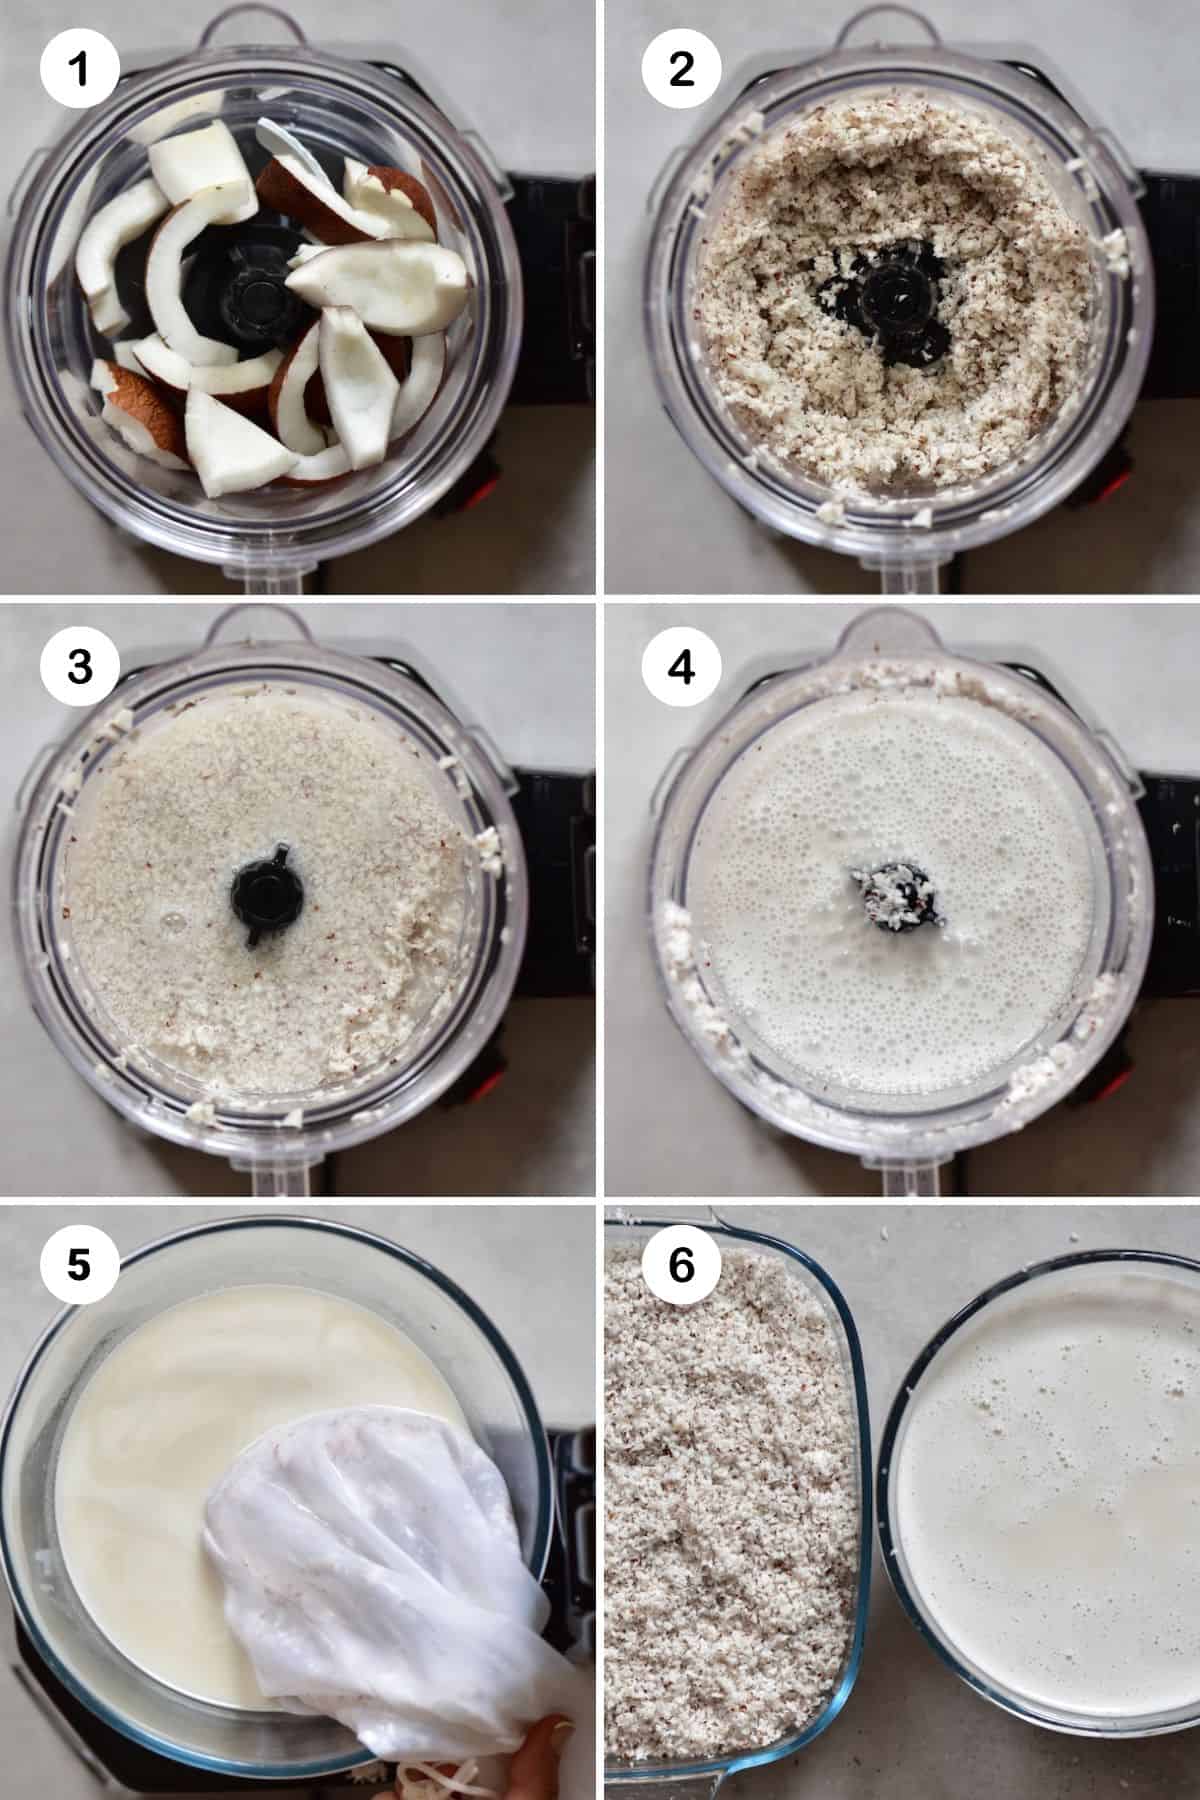 Steps for blending coconut flesh and extracting milk